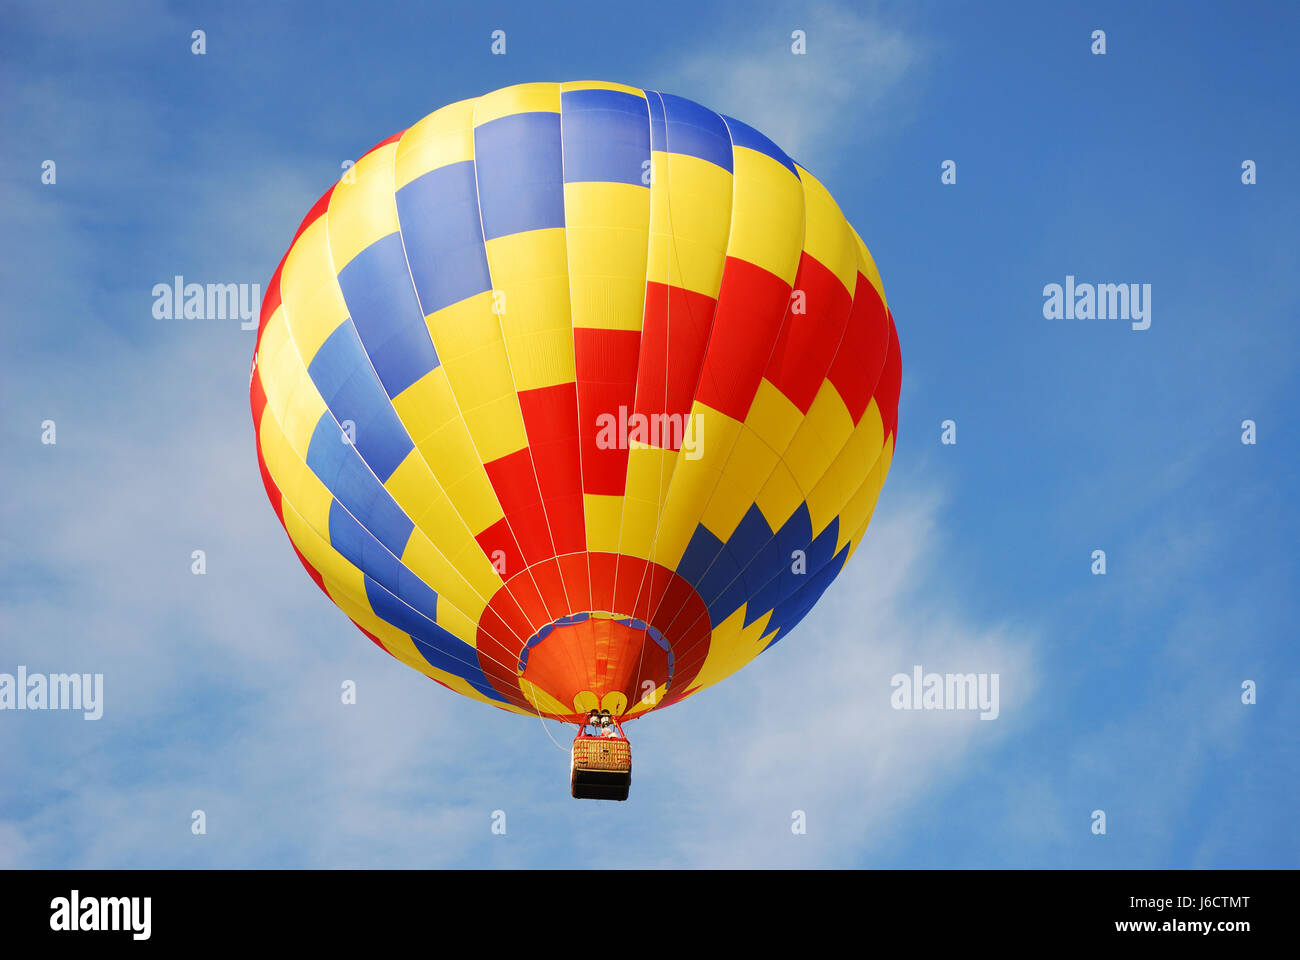 Hot pallone aerostatico aria firmamento cielo vola vola vola vento flying blue sport Foto Stock